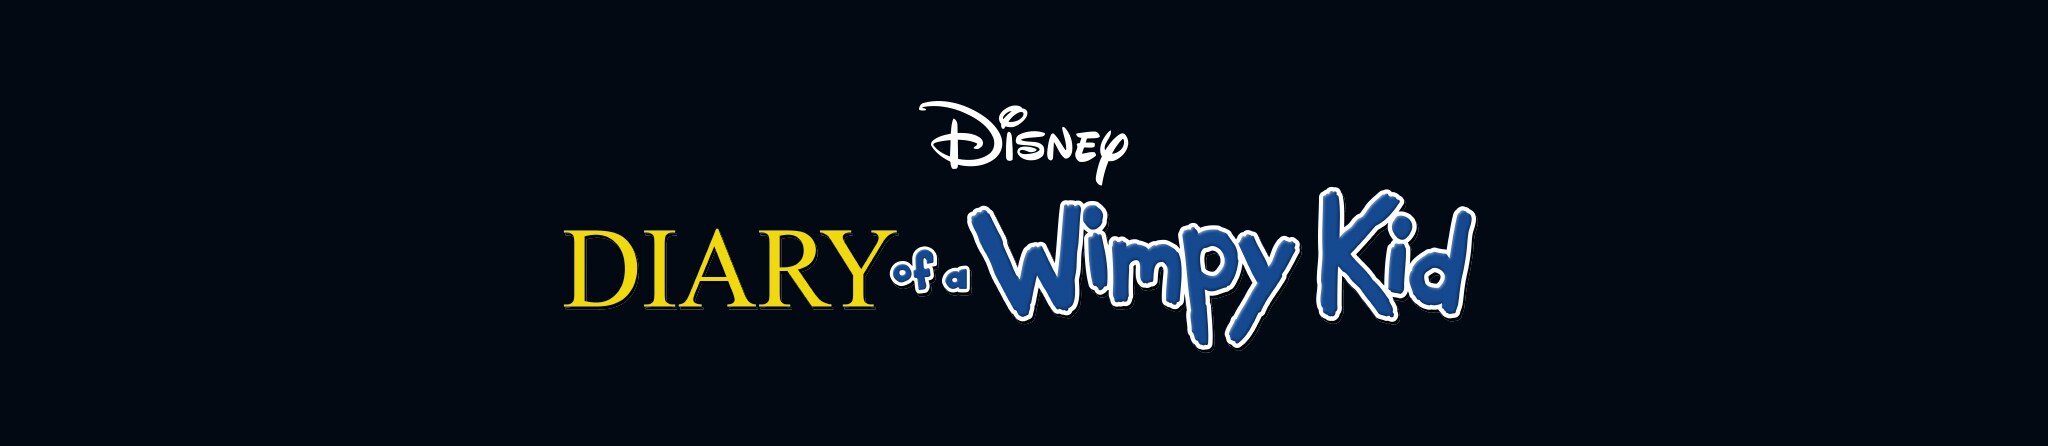 Disney | Diary of a Wimpy Kid